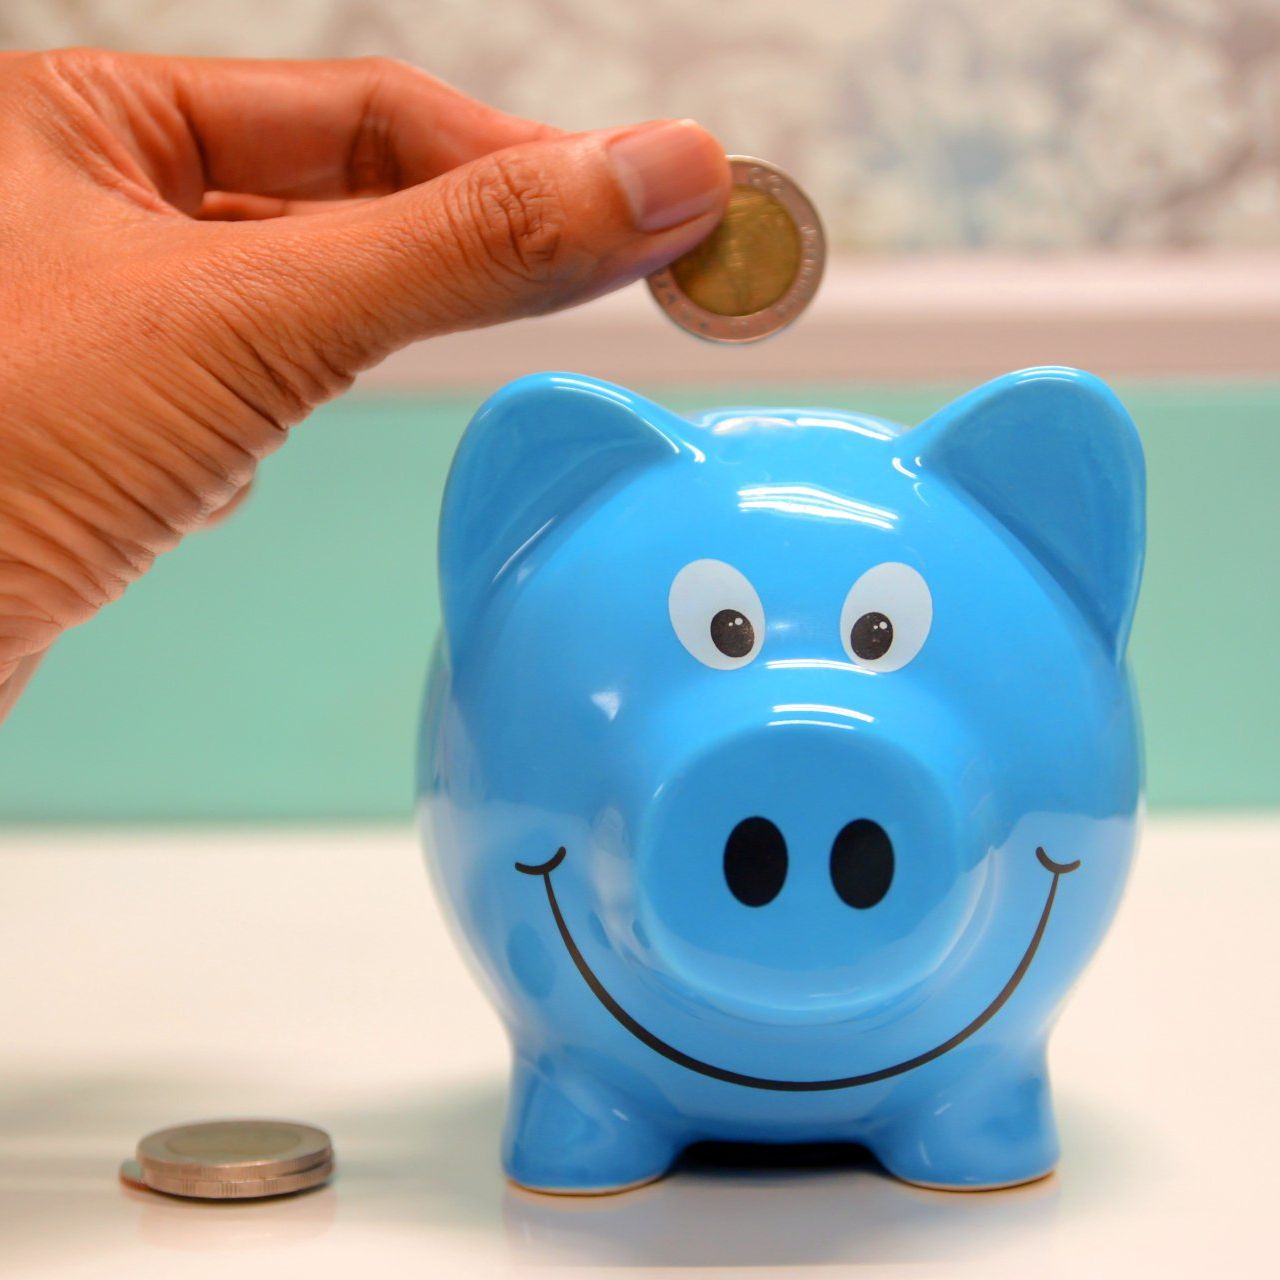 Hand putting coin into a blue piggy bank.